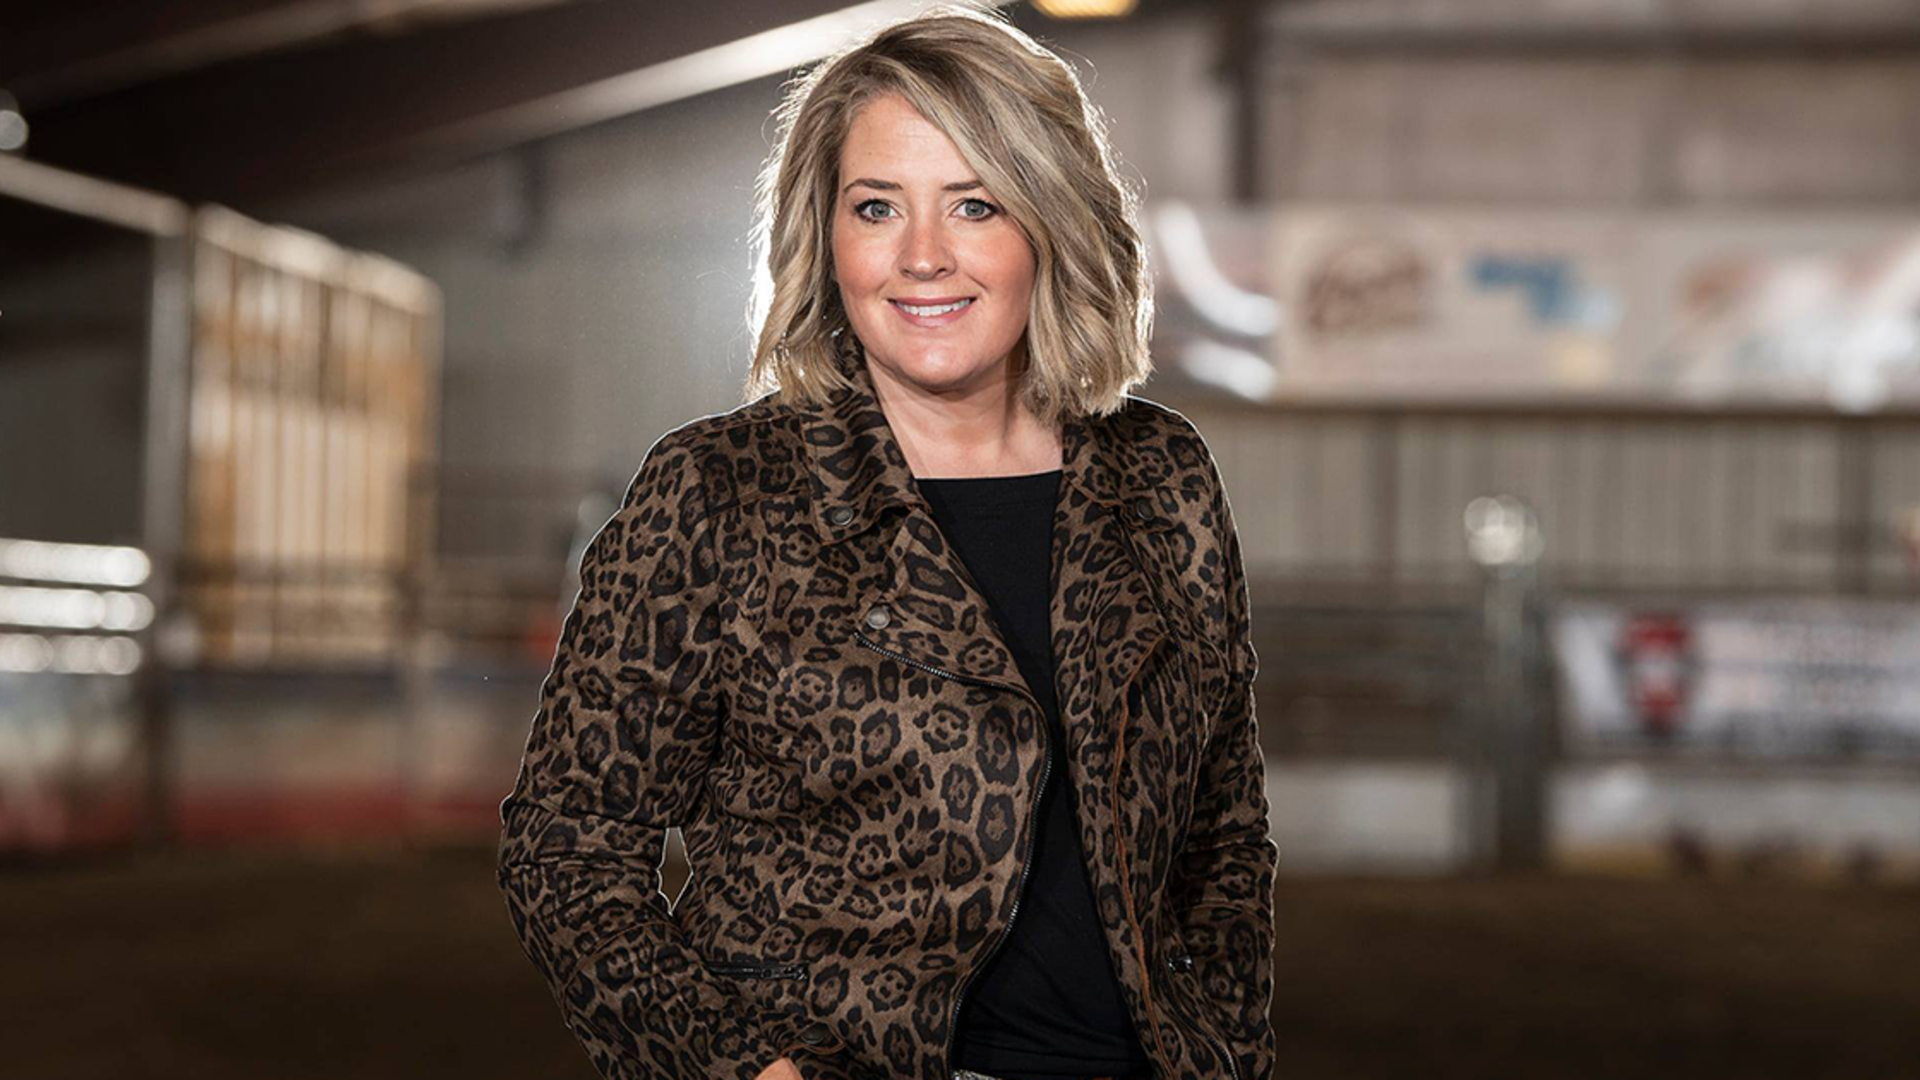 National Western Stock Show Names Jennifer Boka Director of Livestock Operations